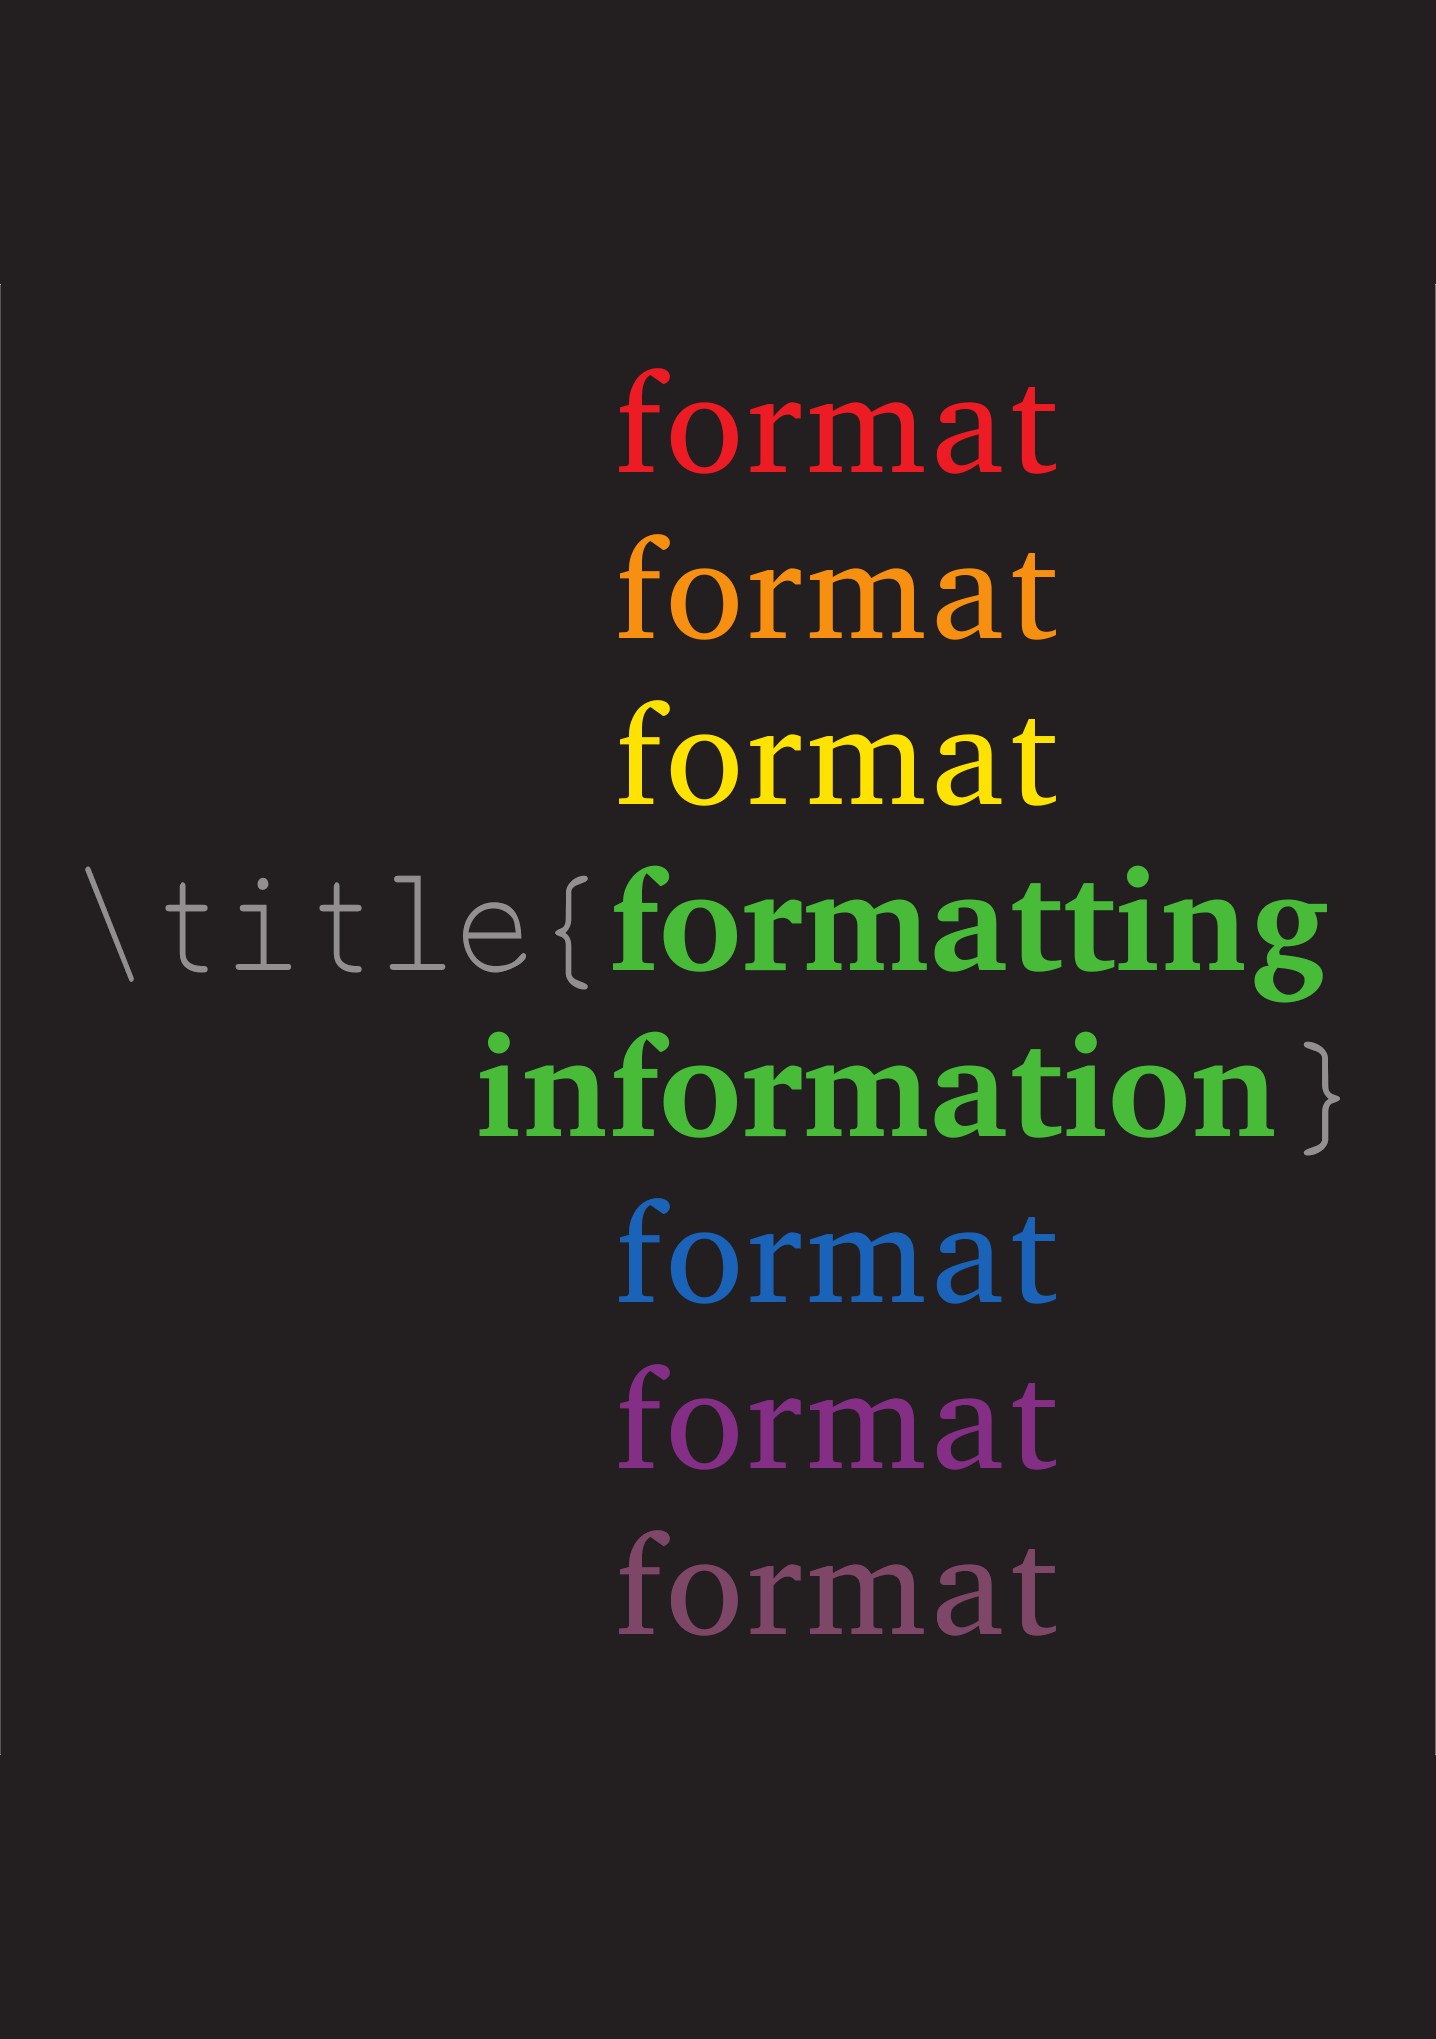 Formatting Information (book)